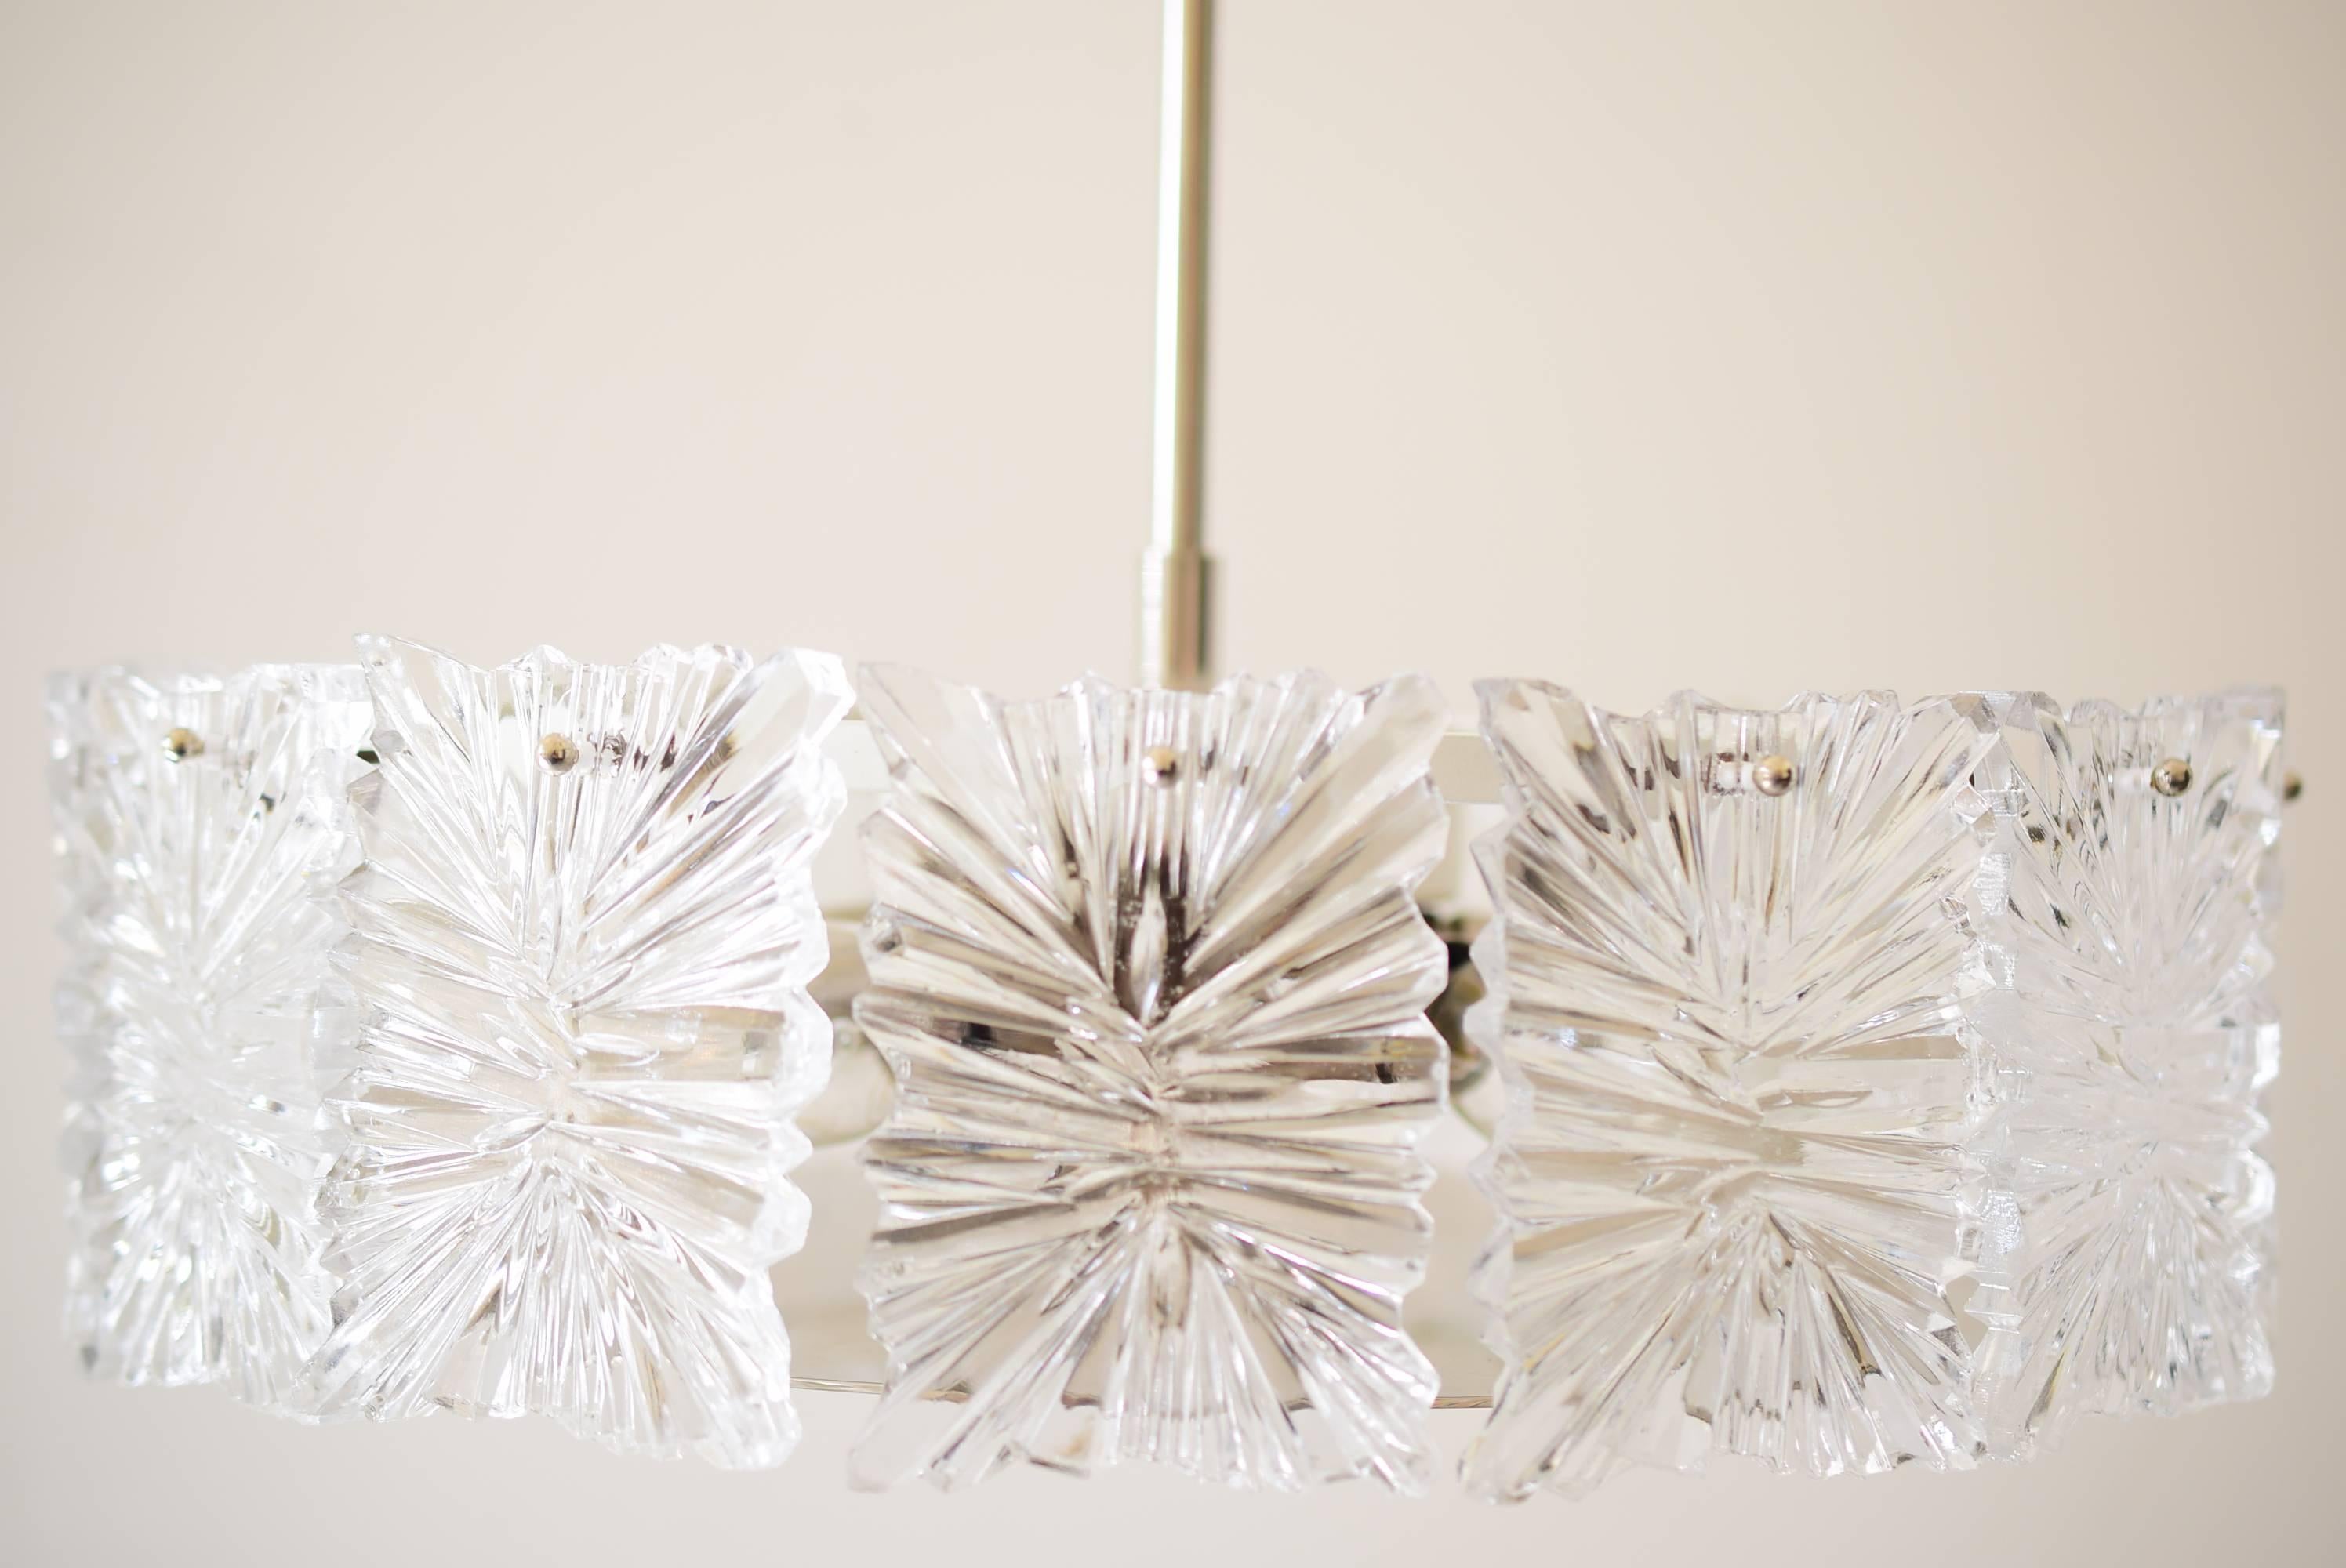 Mid-Century Modernist etched glass chandelier by Kinkeldey.
Original condition.